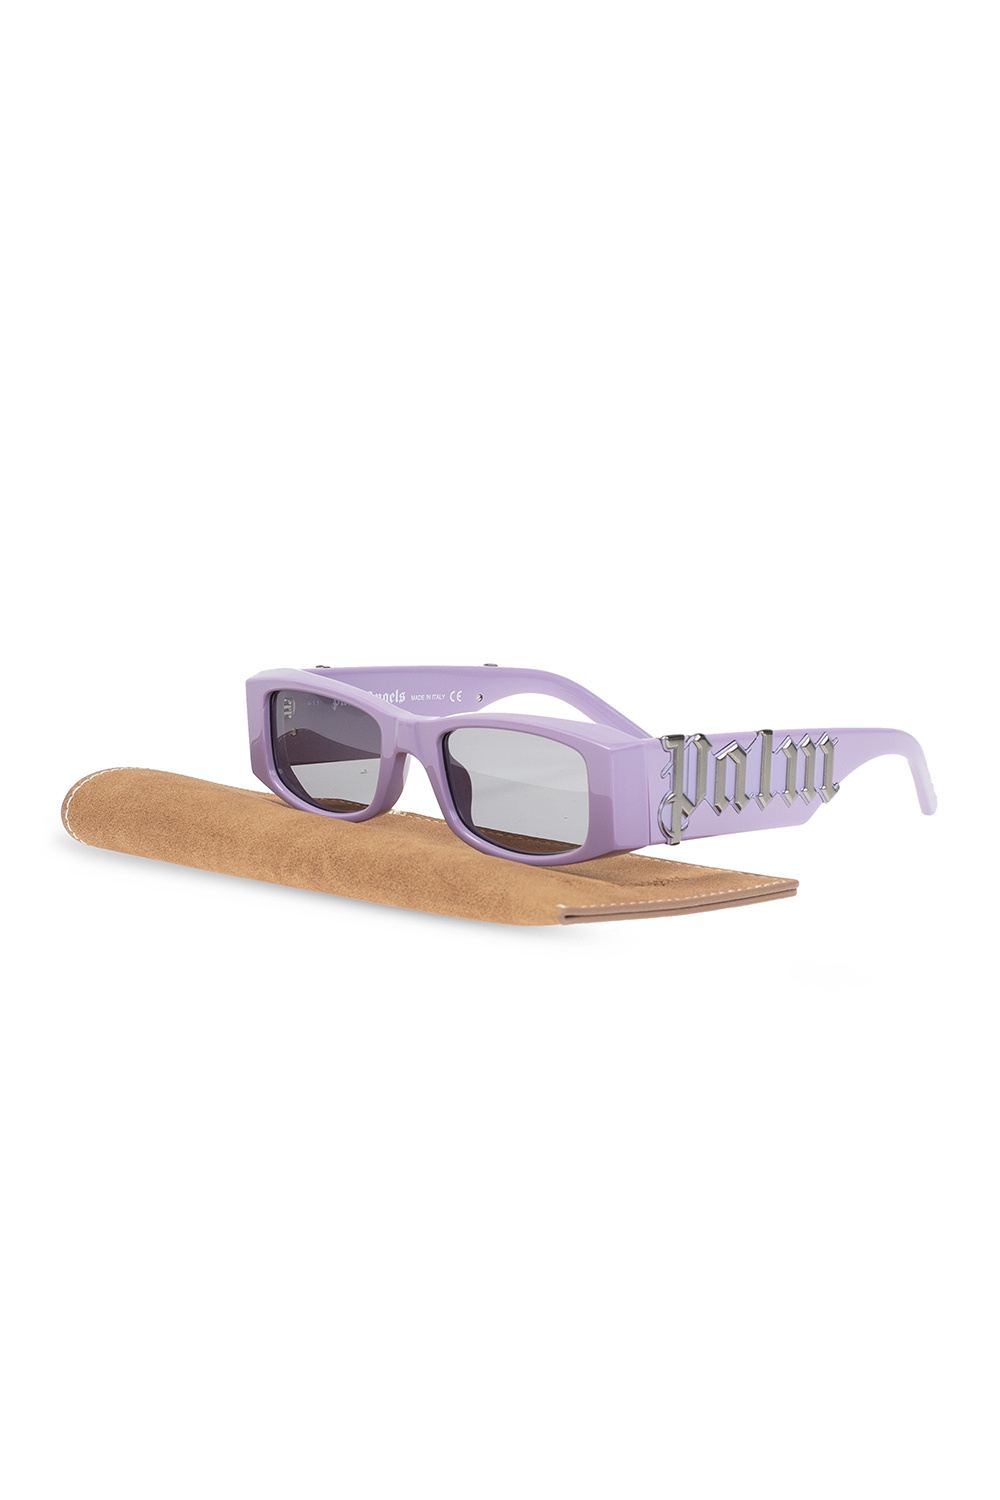 Palm Angels bottega veneta eyewear oval sunglasses item